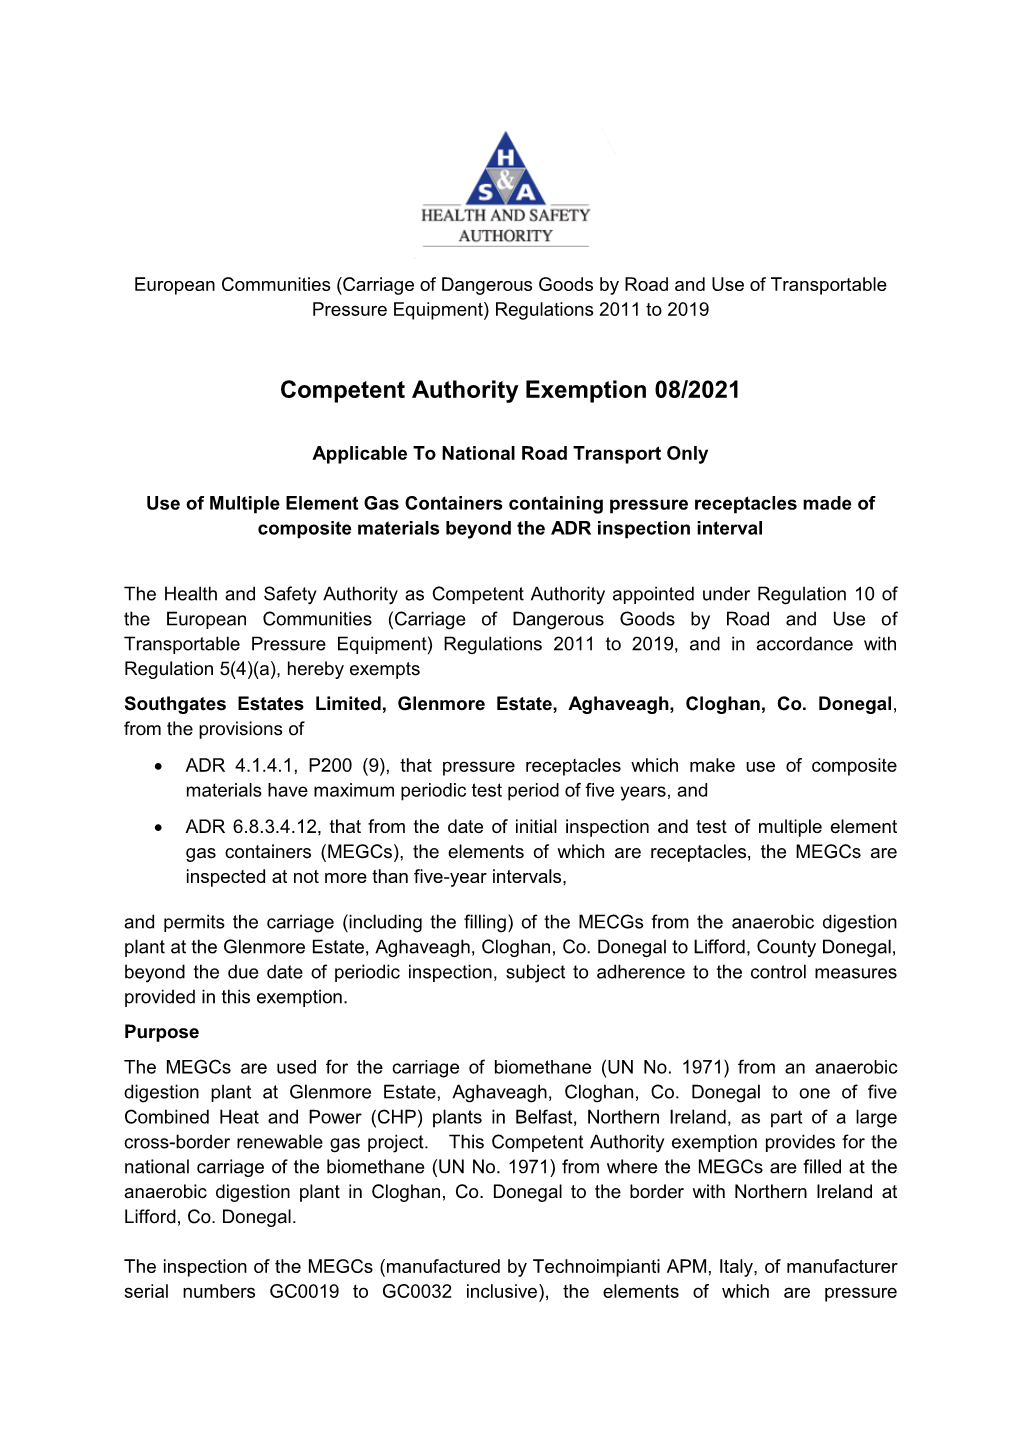 Competent Authority Exemption 08/2021